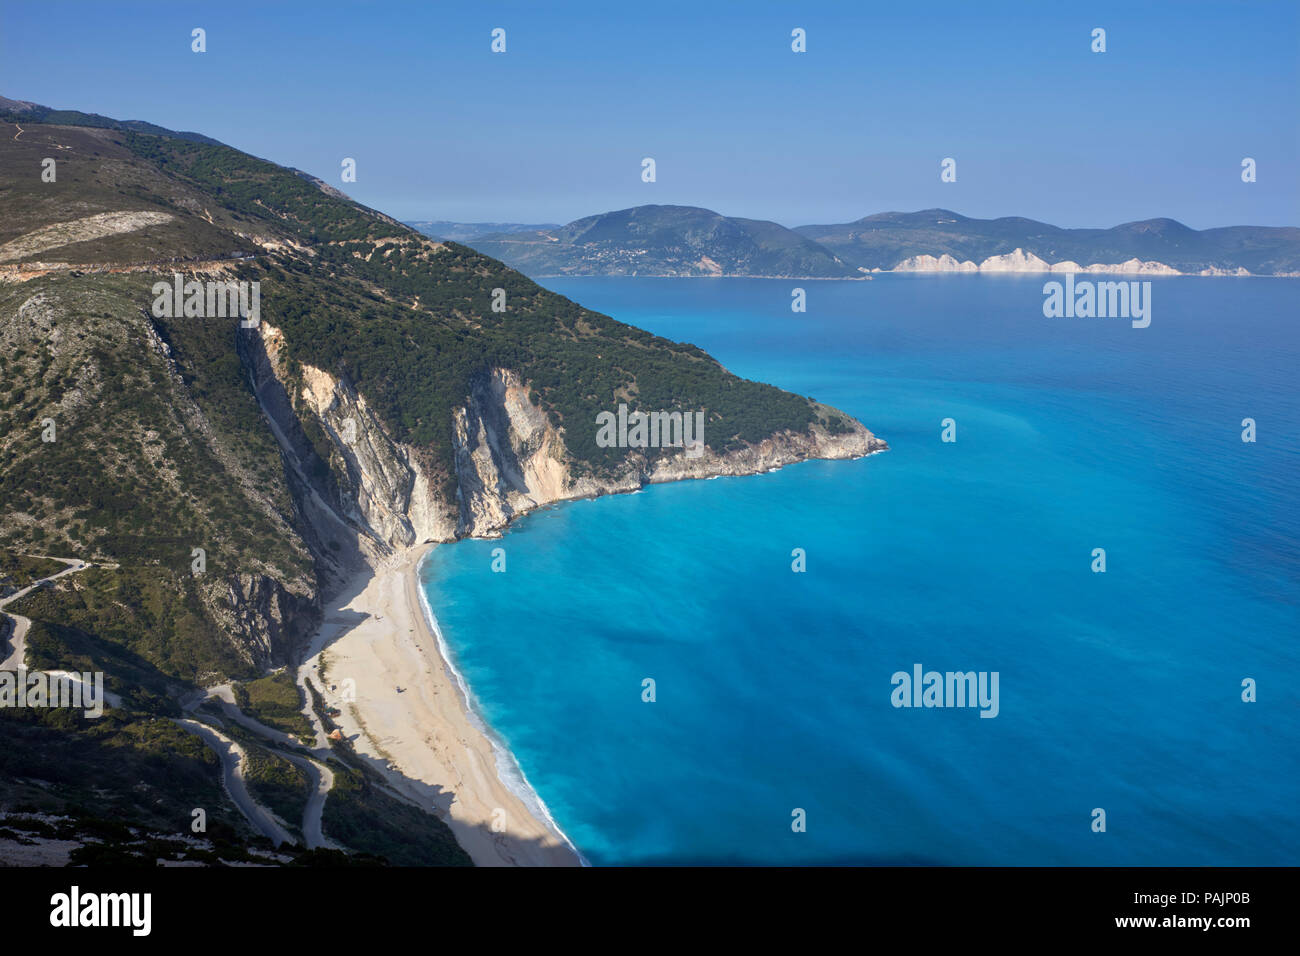 Myrtos Beach with the Paliki Peninsula across the Gulf of Myrtos.  Cephalonia, Ionian Islands, Greece. Stock Photo